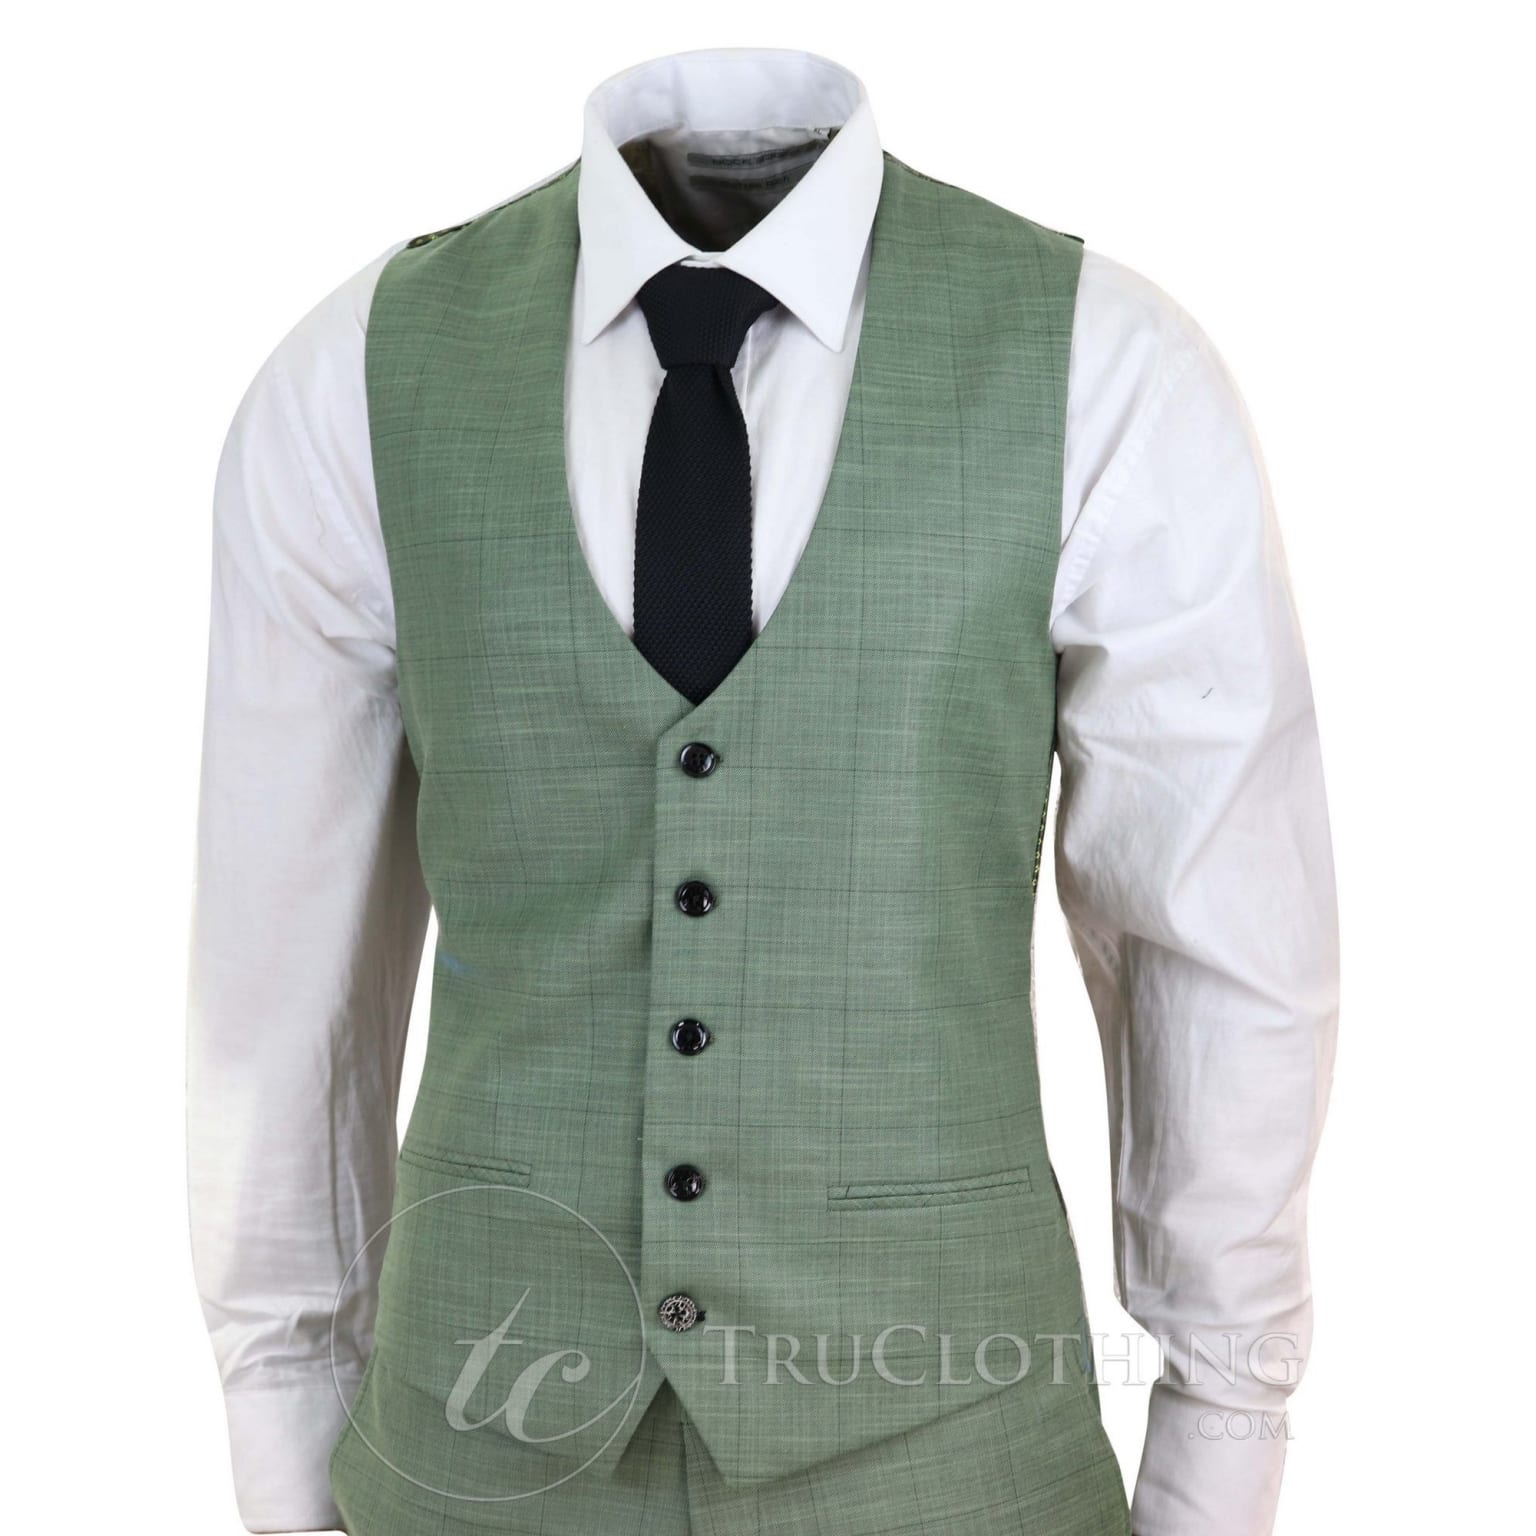 Mens Mint Green Tailored Fit Suit | Happy Gentleman